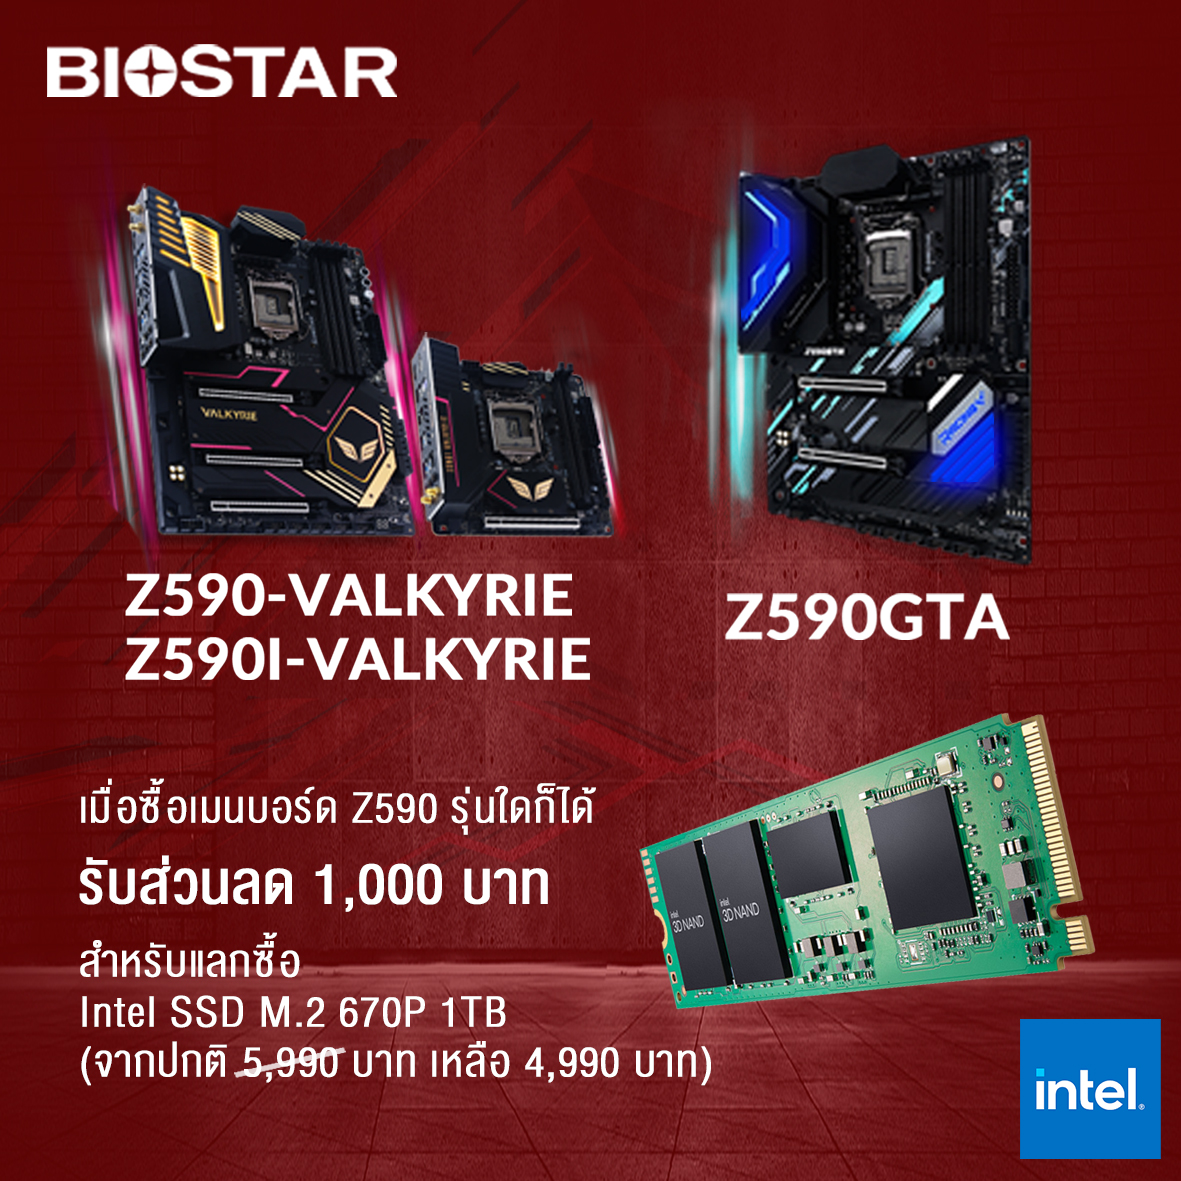 biostar intel 670p 0 Intel จัดโปรโมชั่นสุดพิเศษกับโปรโมชั่นแพ๊คคู่มากมายเมื่อซื้อ Intel NUC Performance Kit (Core i7 /i5 ) และเมื่อซื้อเมนบอร์ด Biostar รุ่น Z590 Valkyrie, Z590I Valkyrie และ Z590GTA รับส่วนลดทันที 1,000 บาท